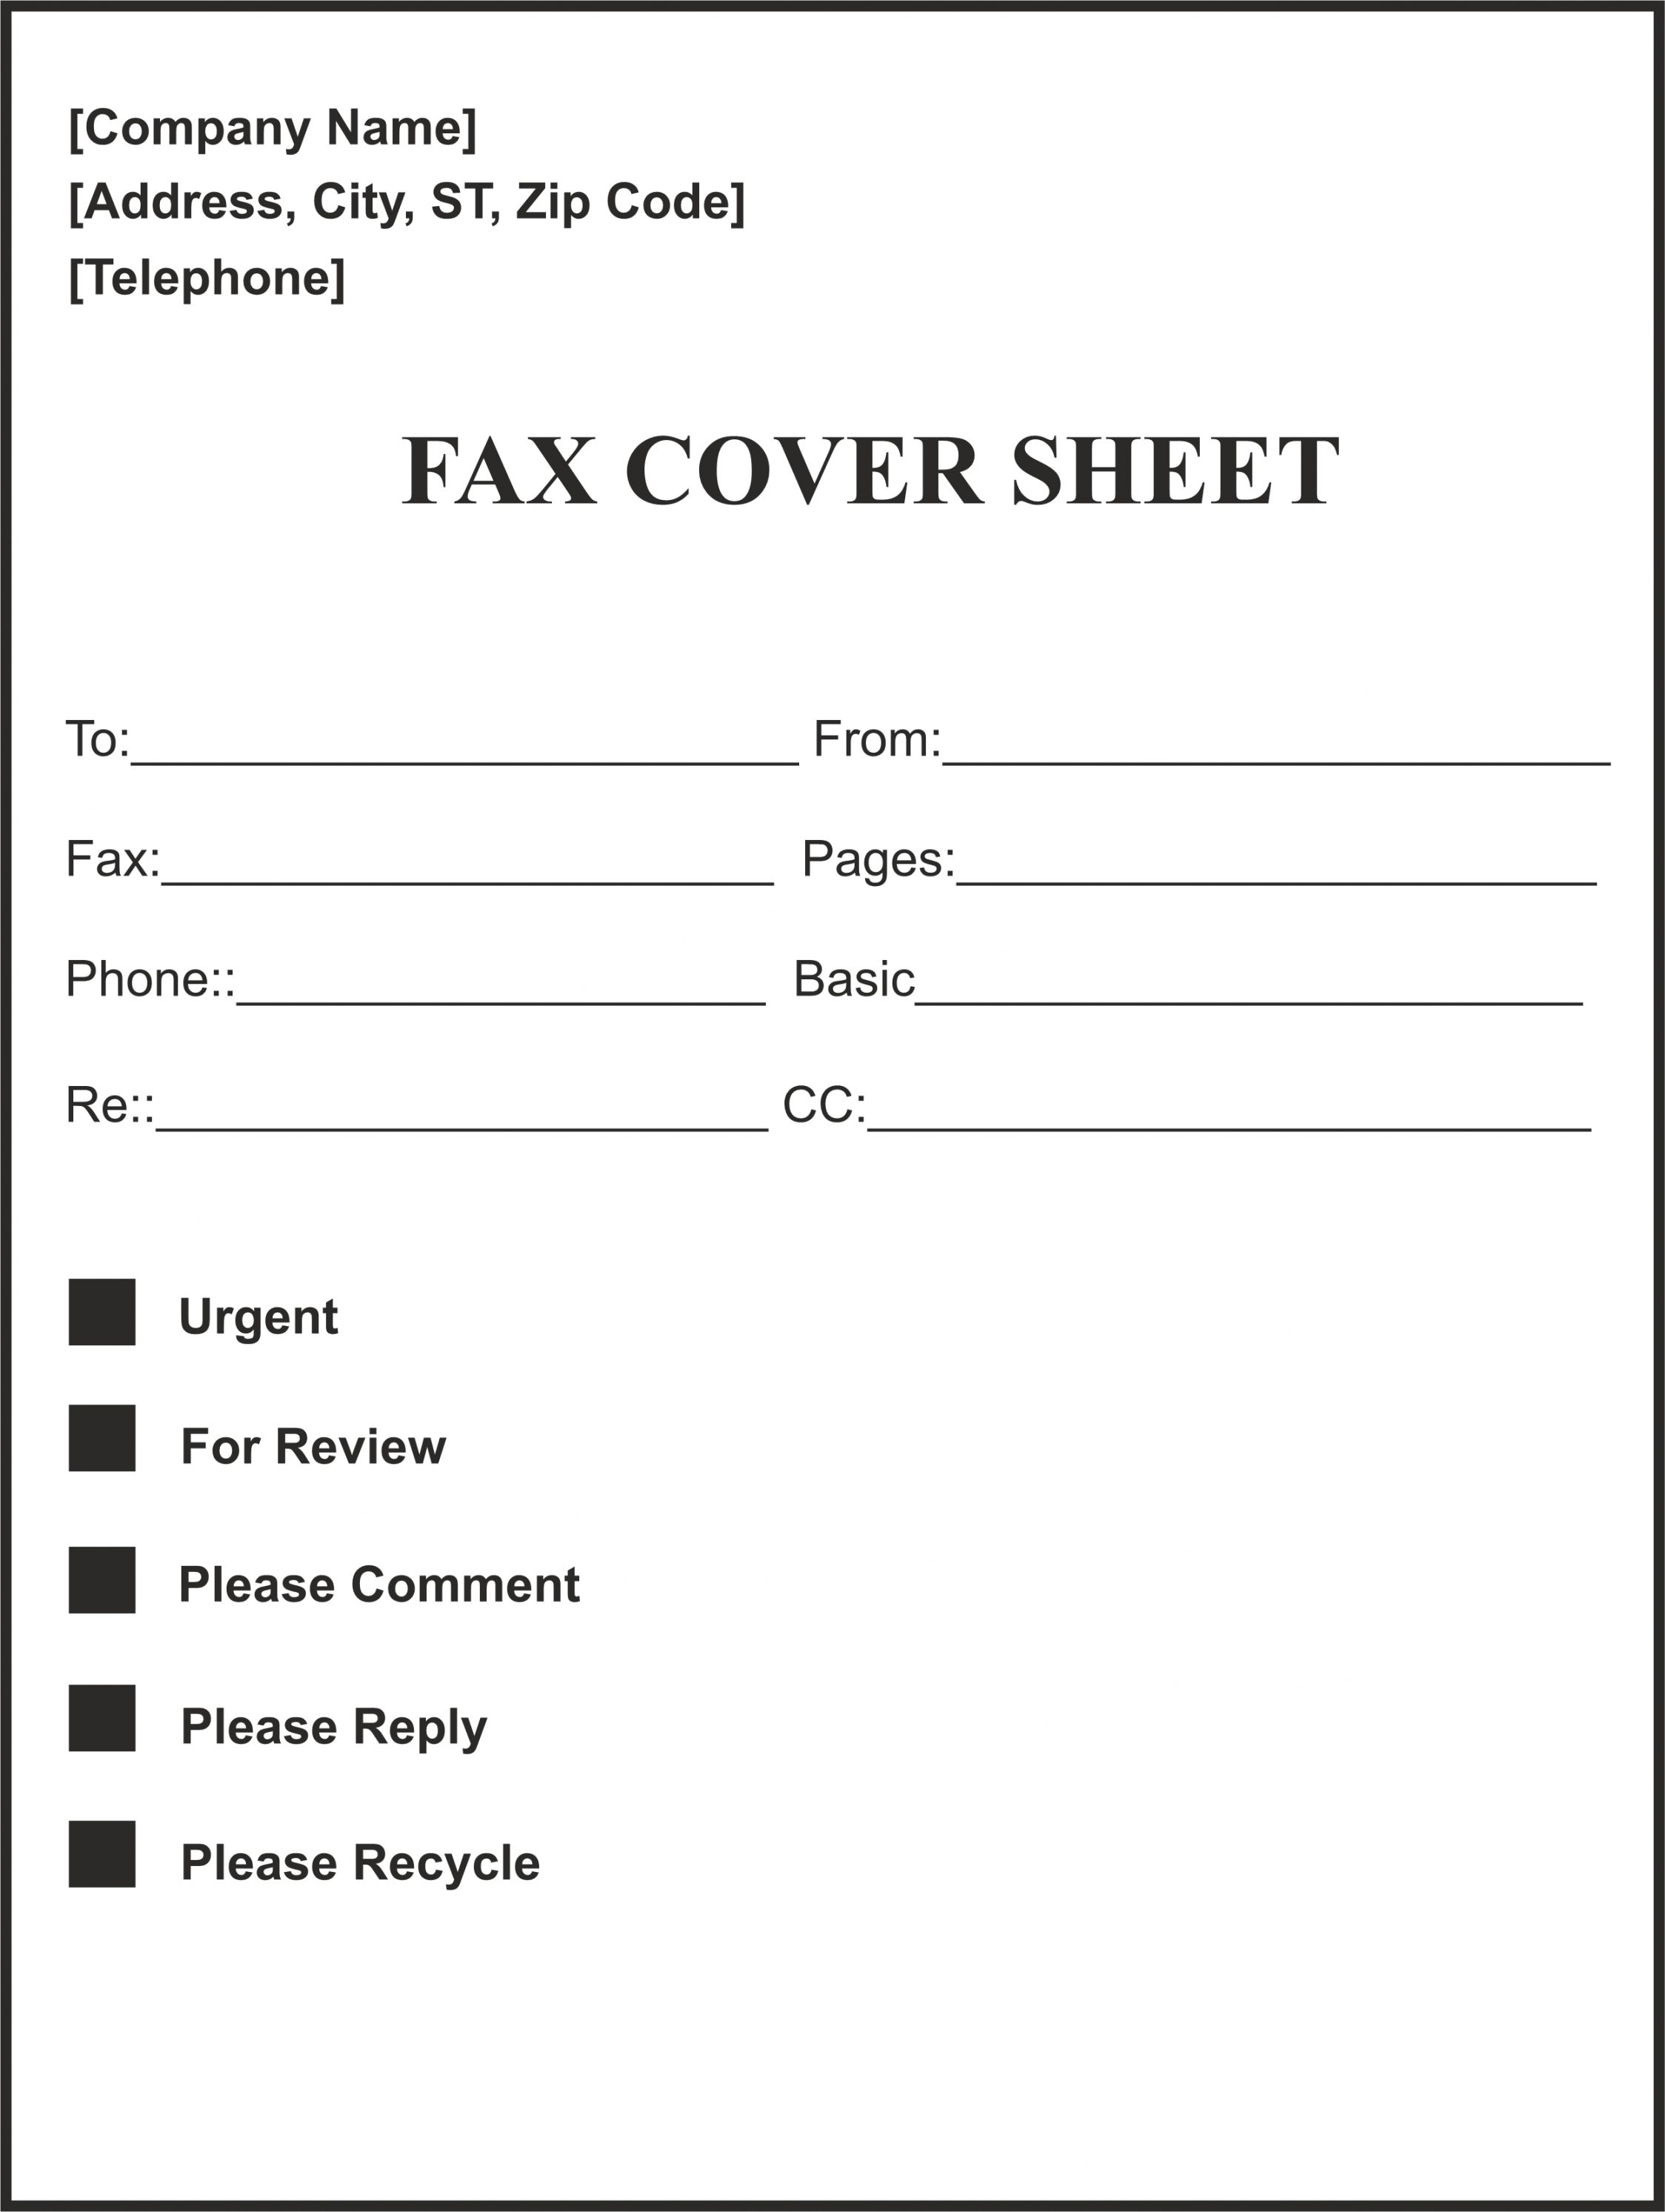 Fax Cover Sheet Free Printable - Printable - Fax Cover Sheet Fillable  Cover sheet template, Fax cover sheet